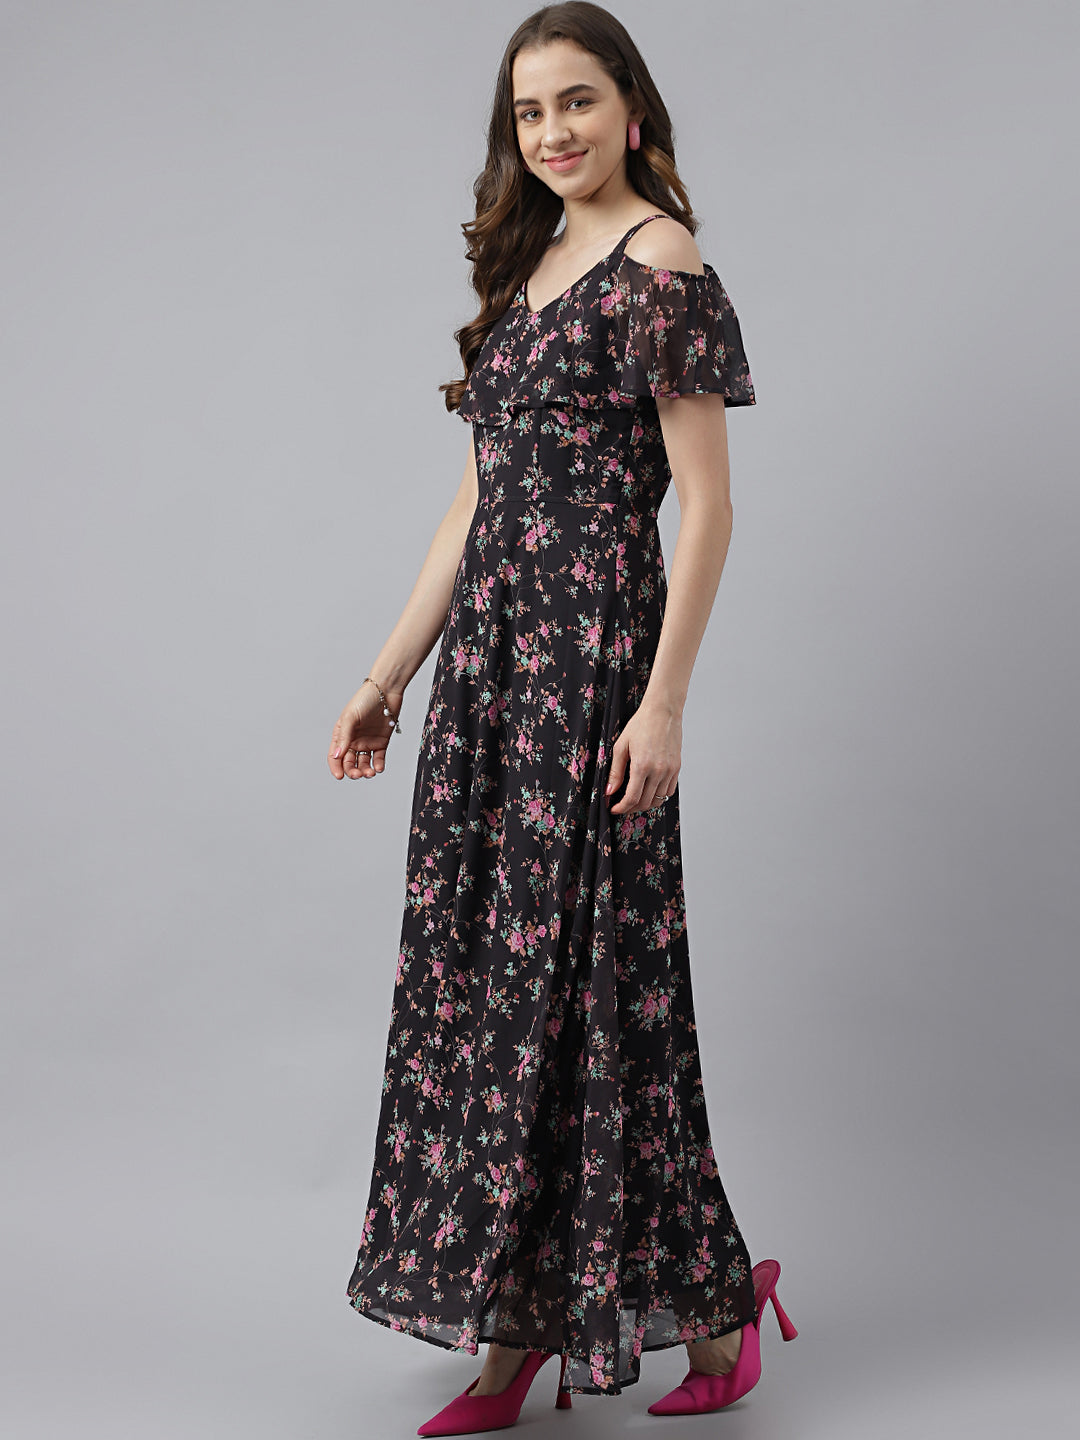 Black Floral Printed V-Neck With Cold Shoulder Layered High-Low Maxi Dress